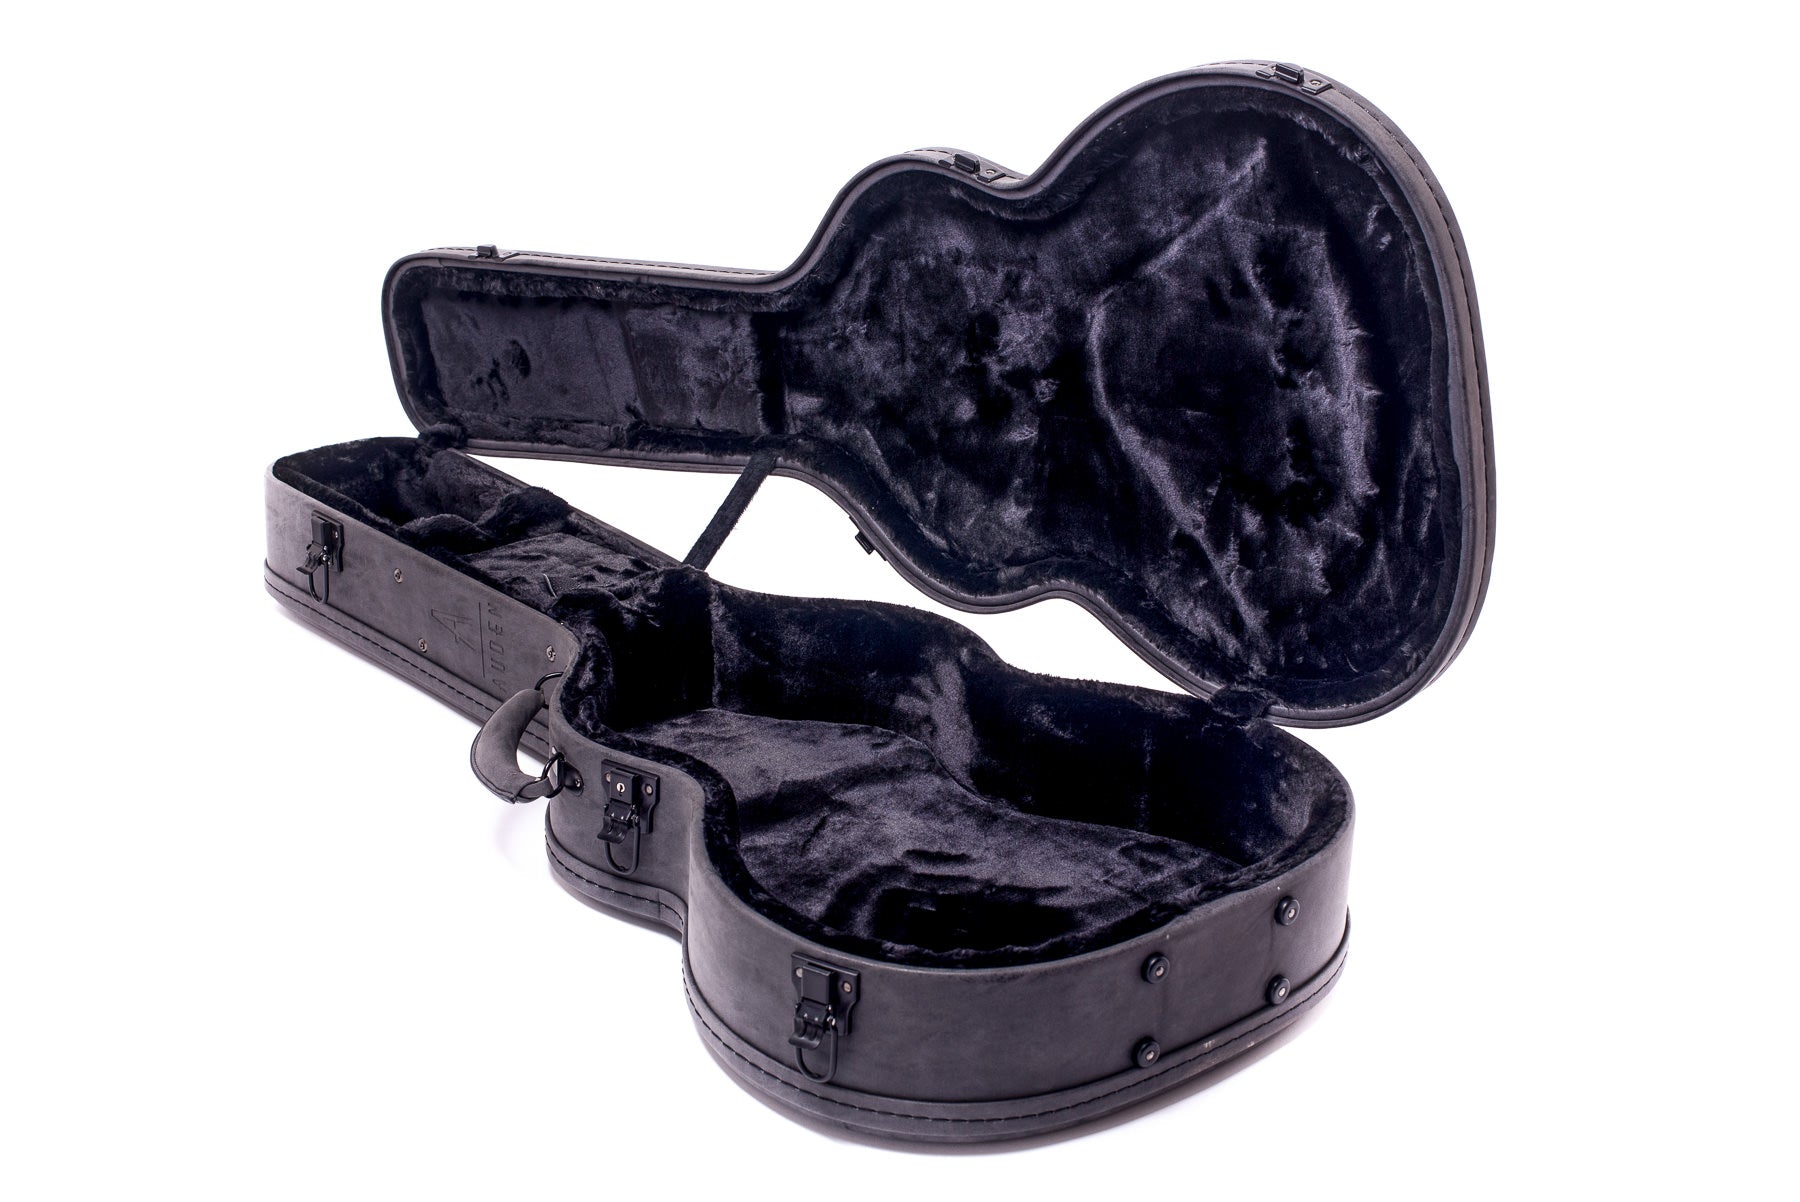 Auden Austin Black Series Spruce Mahogany Cutaway Electro Acoustic Guitar, Electro Acoustic Guitar for sale at Richards Guitars.